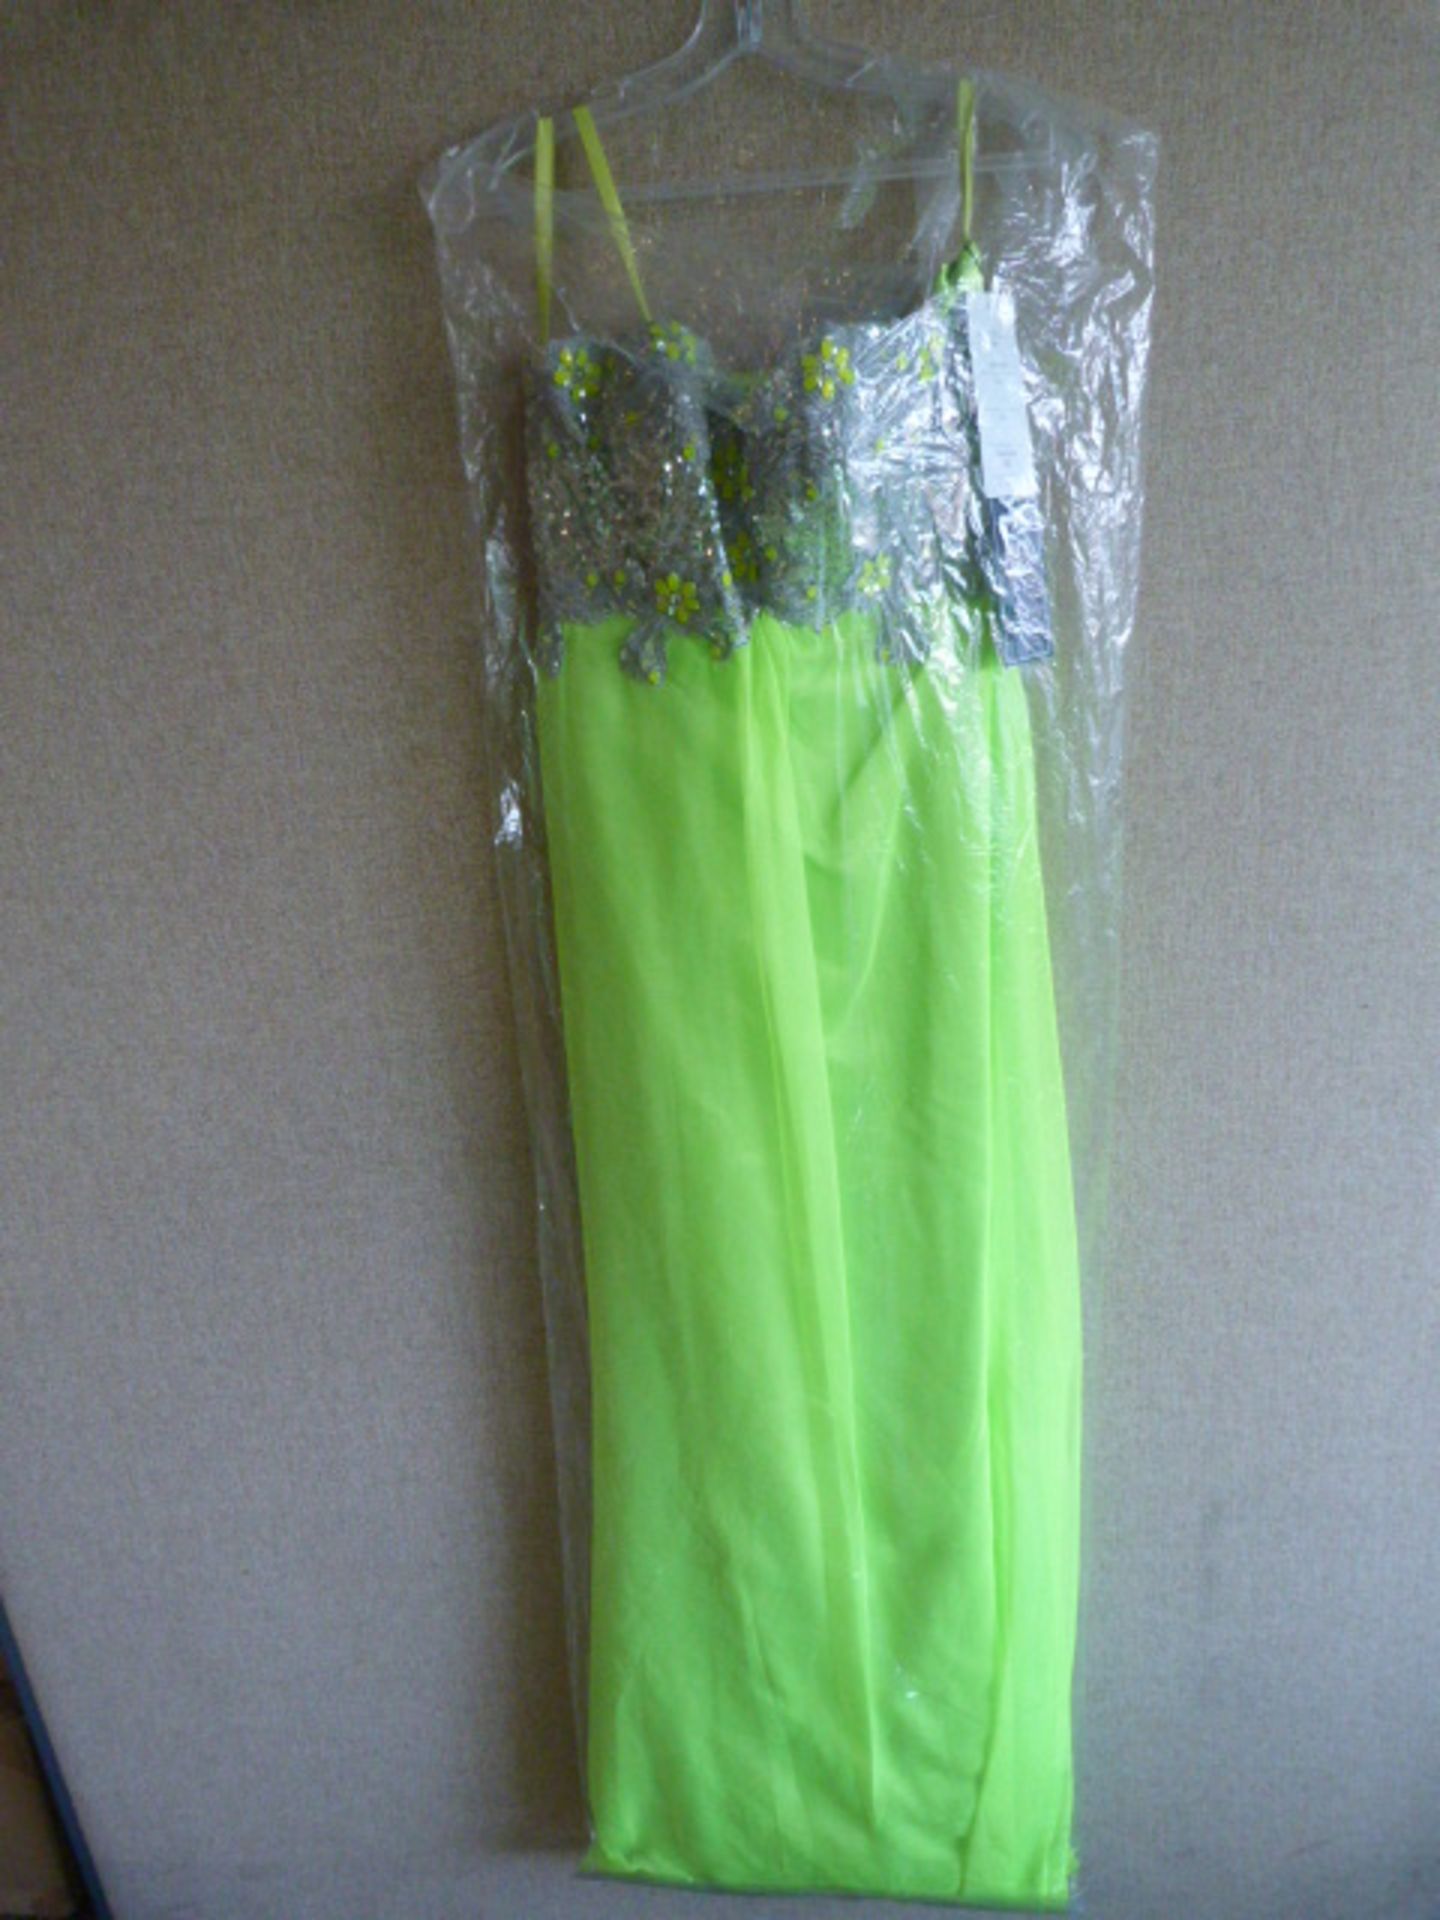 *Lana Neon Lime Prom Dress Size:8